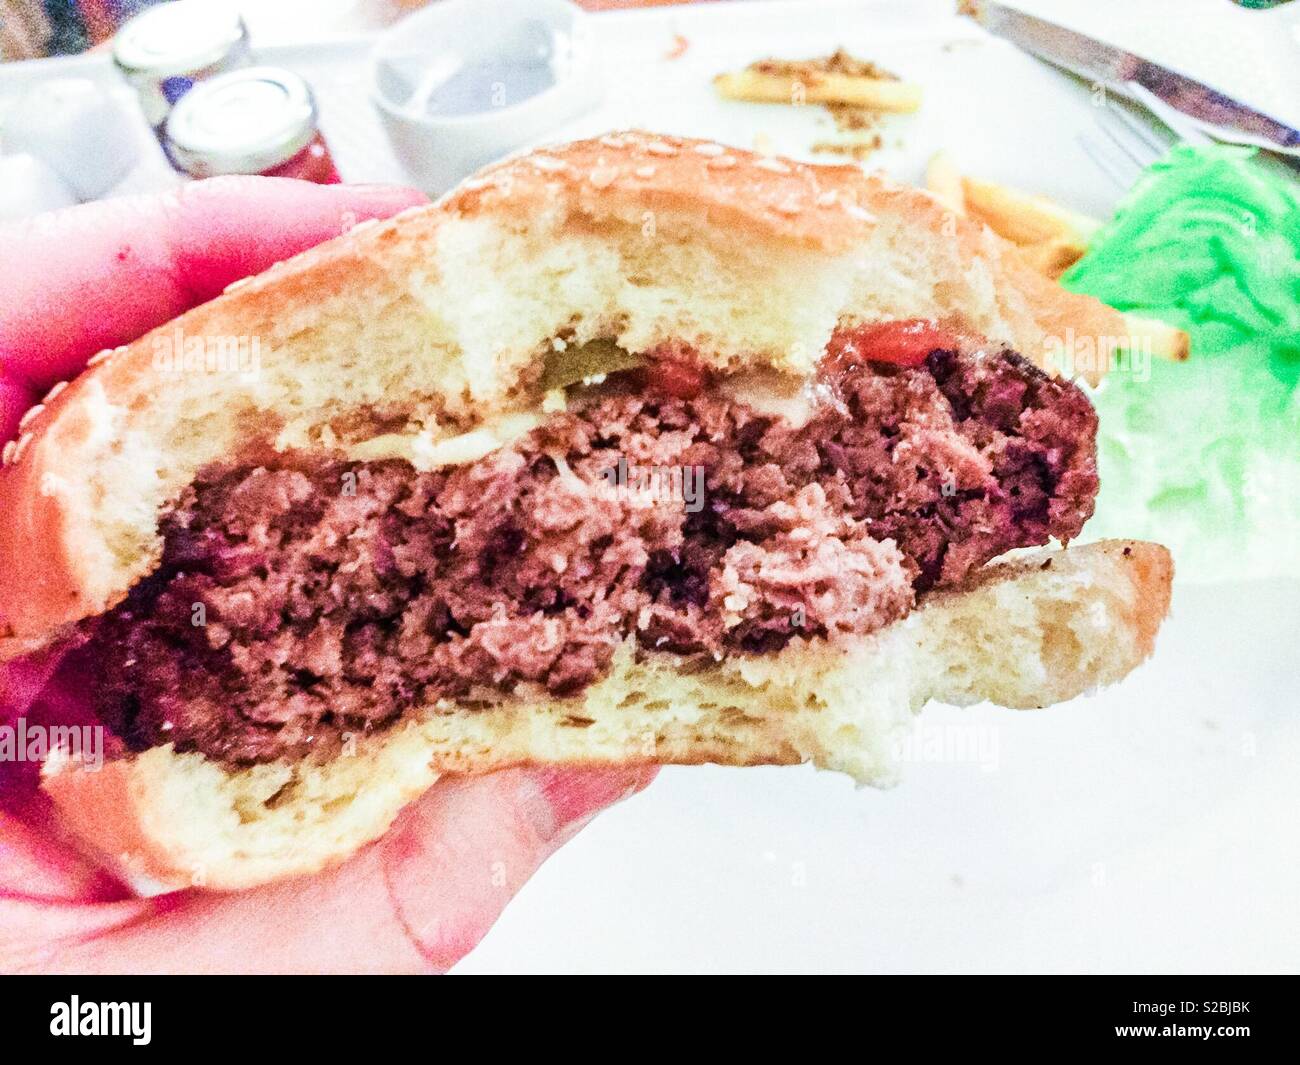 Half eaten juicy cheeseburger Stock Photo